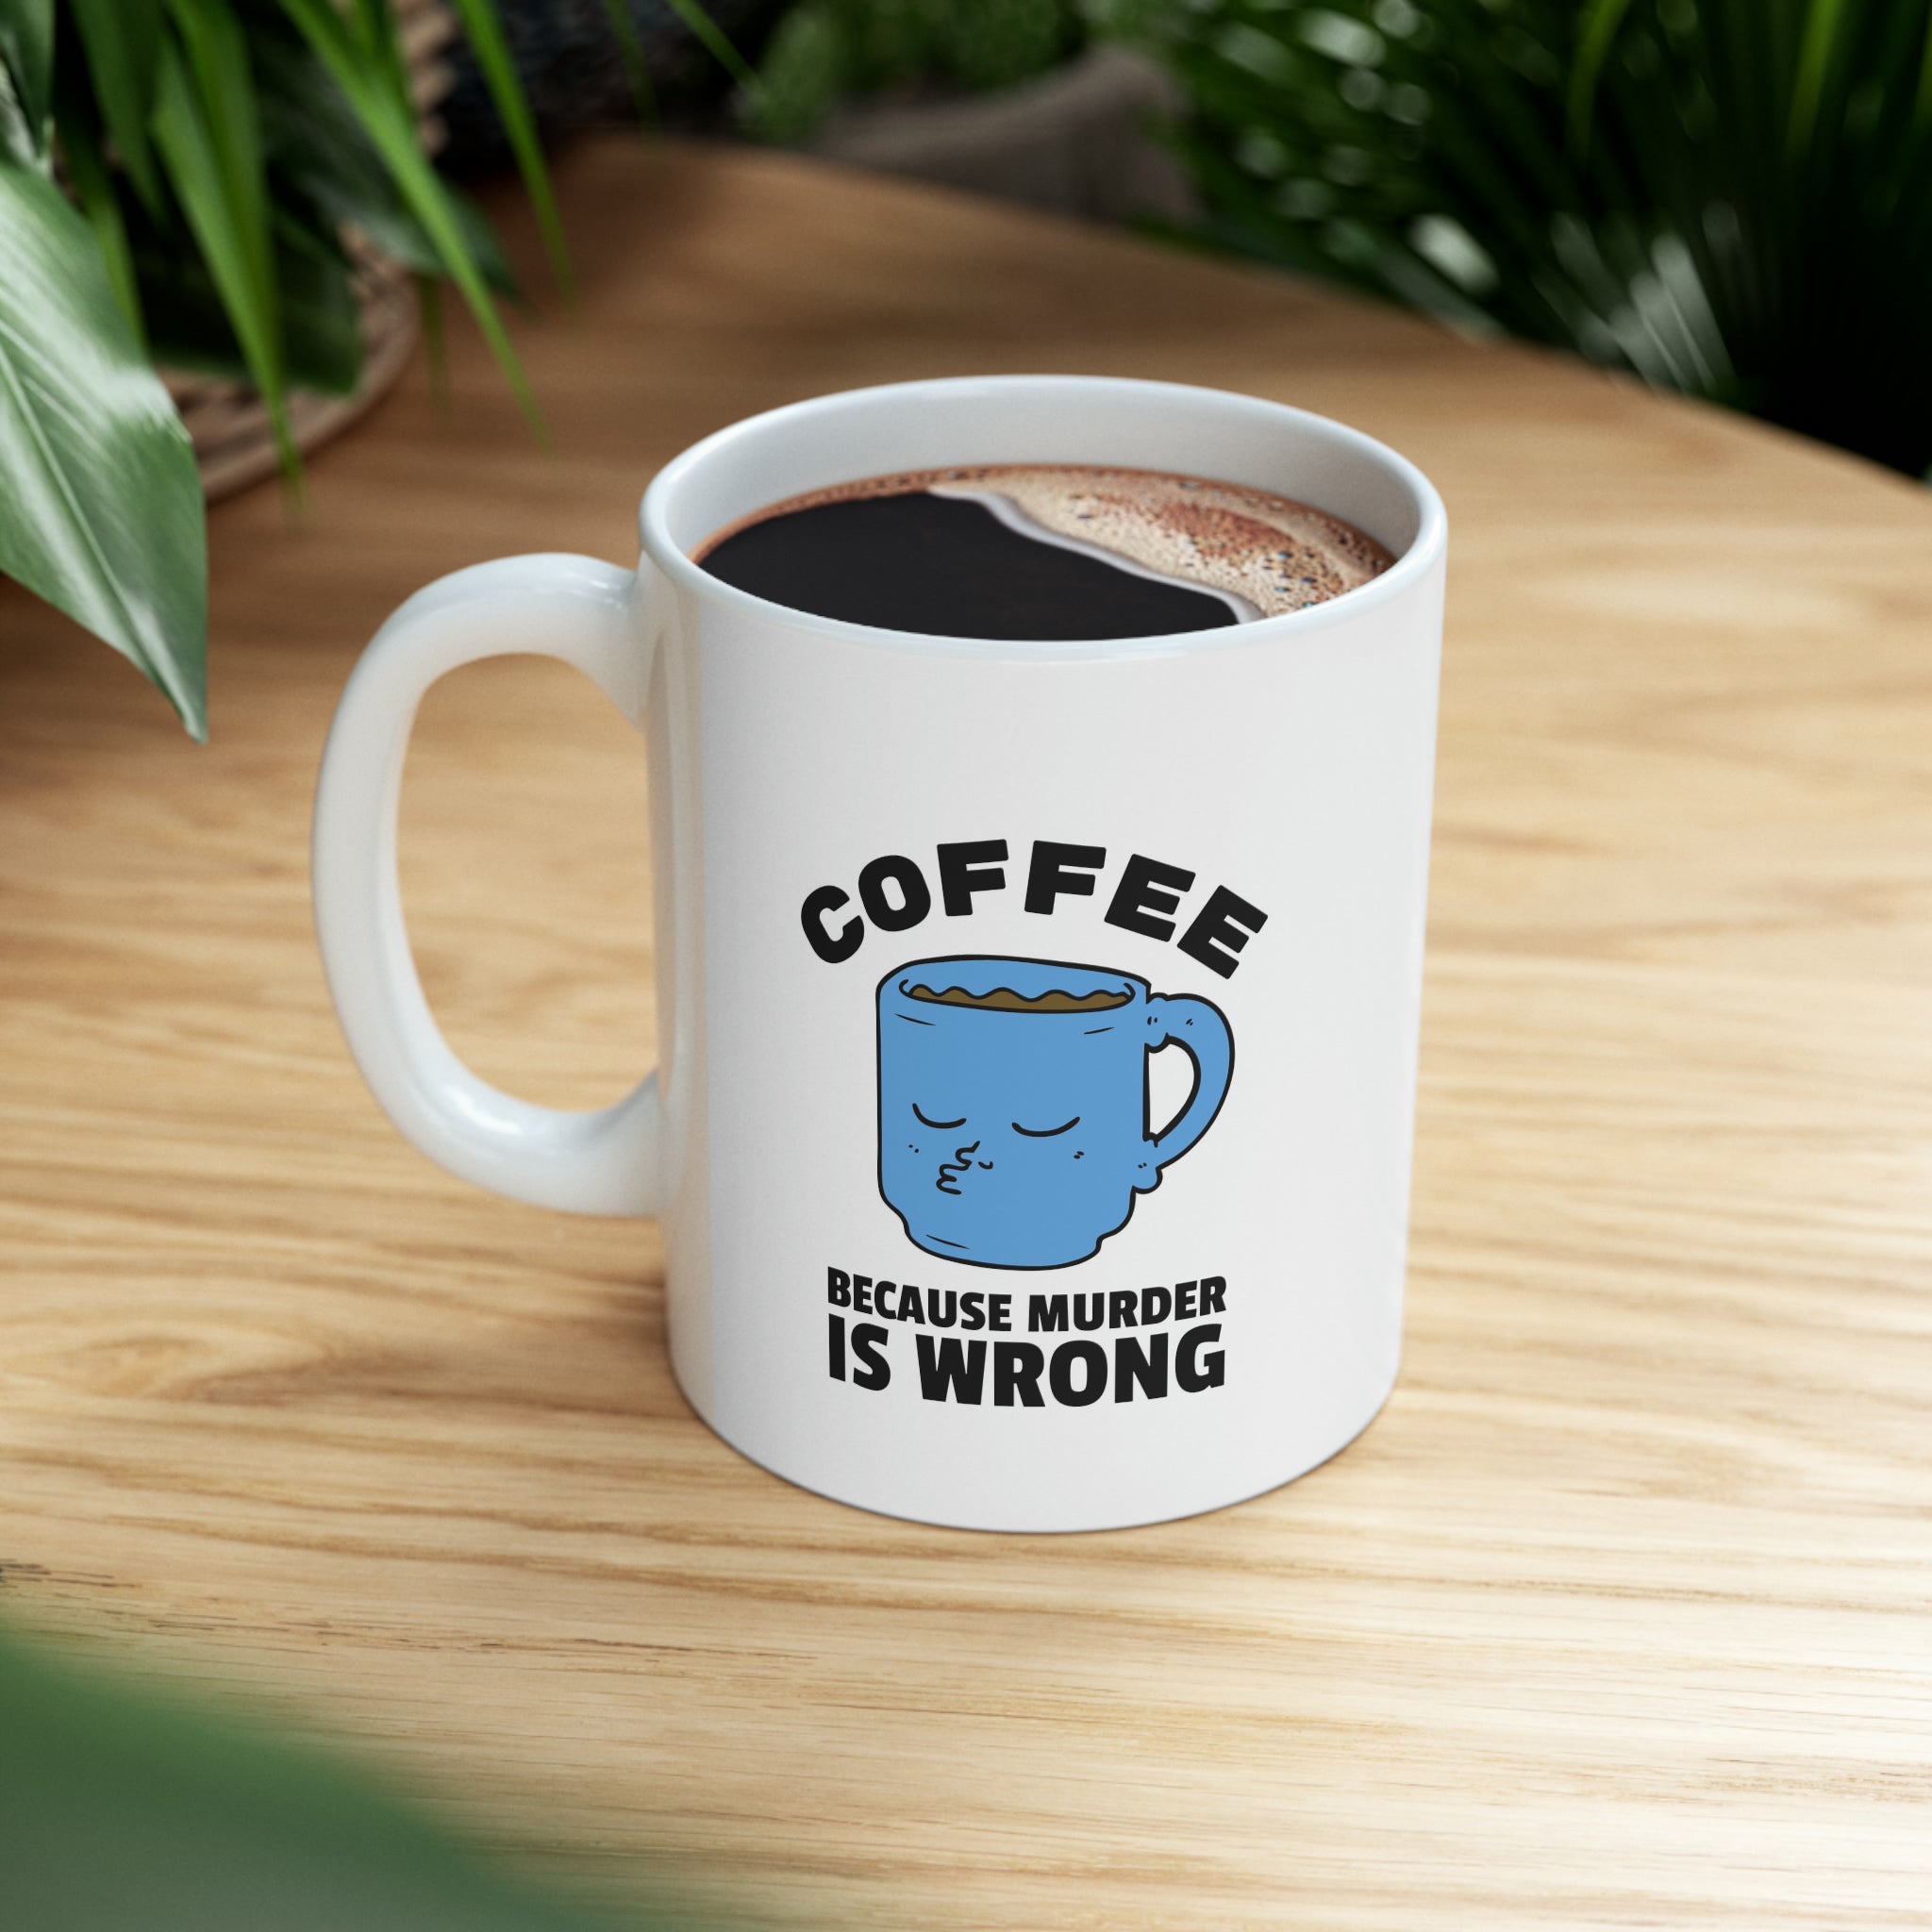 "Coffee, Because Murder Is Wrong" Funny Ceramic Mug, 11oz - The Perfect Mug for Dark Humor & Coffee Enthusiasts